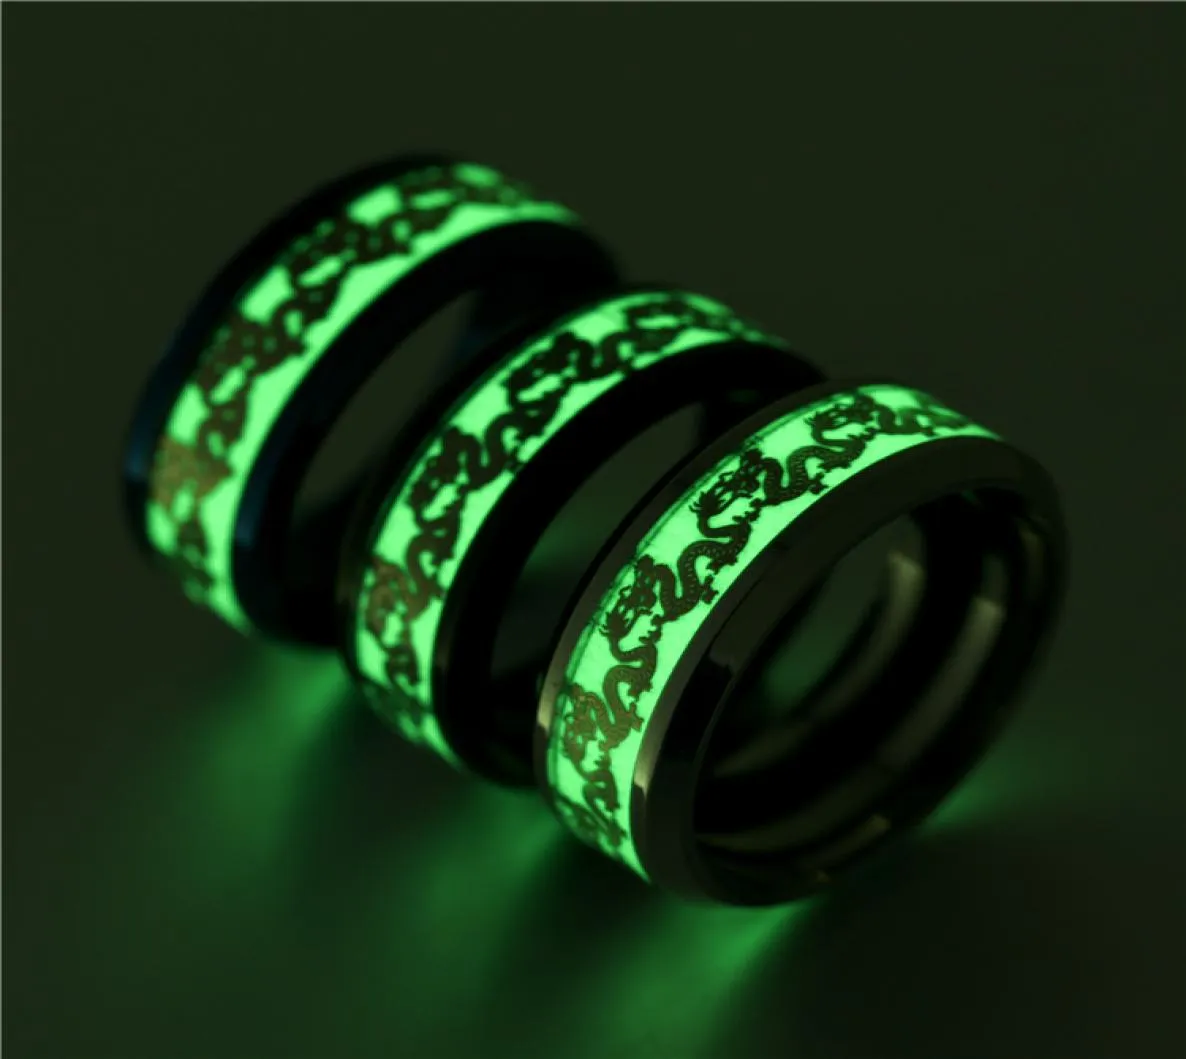 8mm Titanium Steel New Luminous Dragon Ring Popular Jewelry Band Rings designer Whole9010548